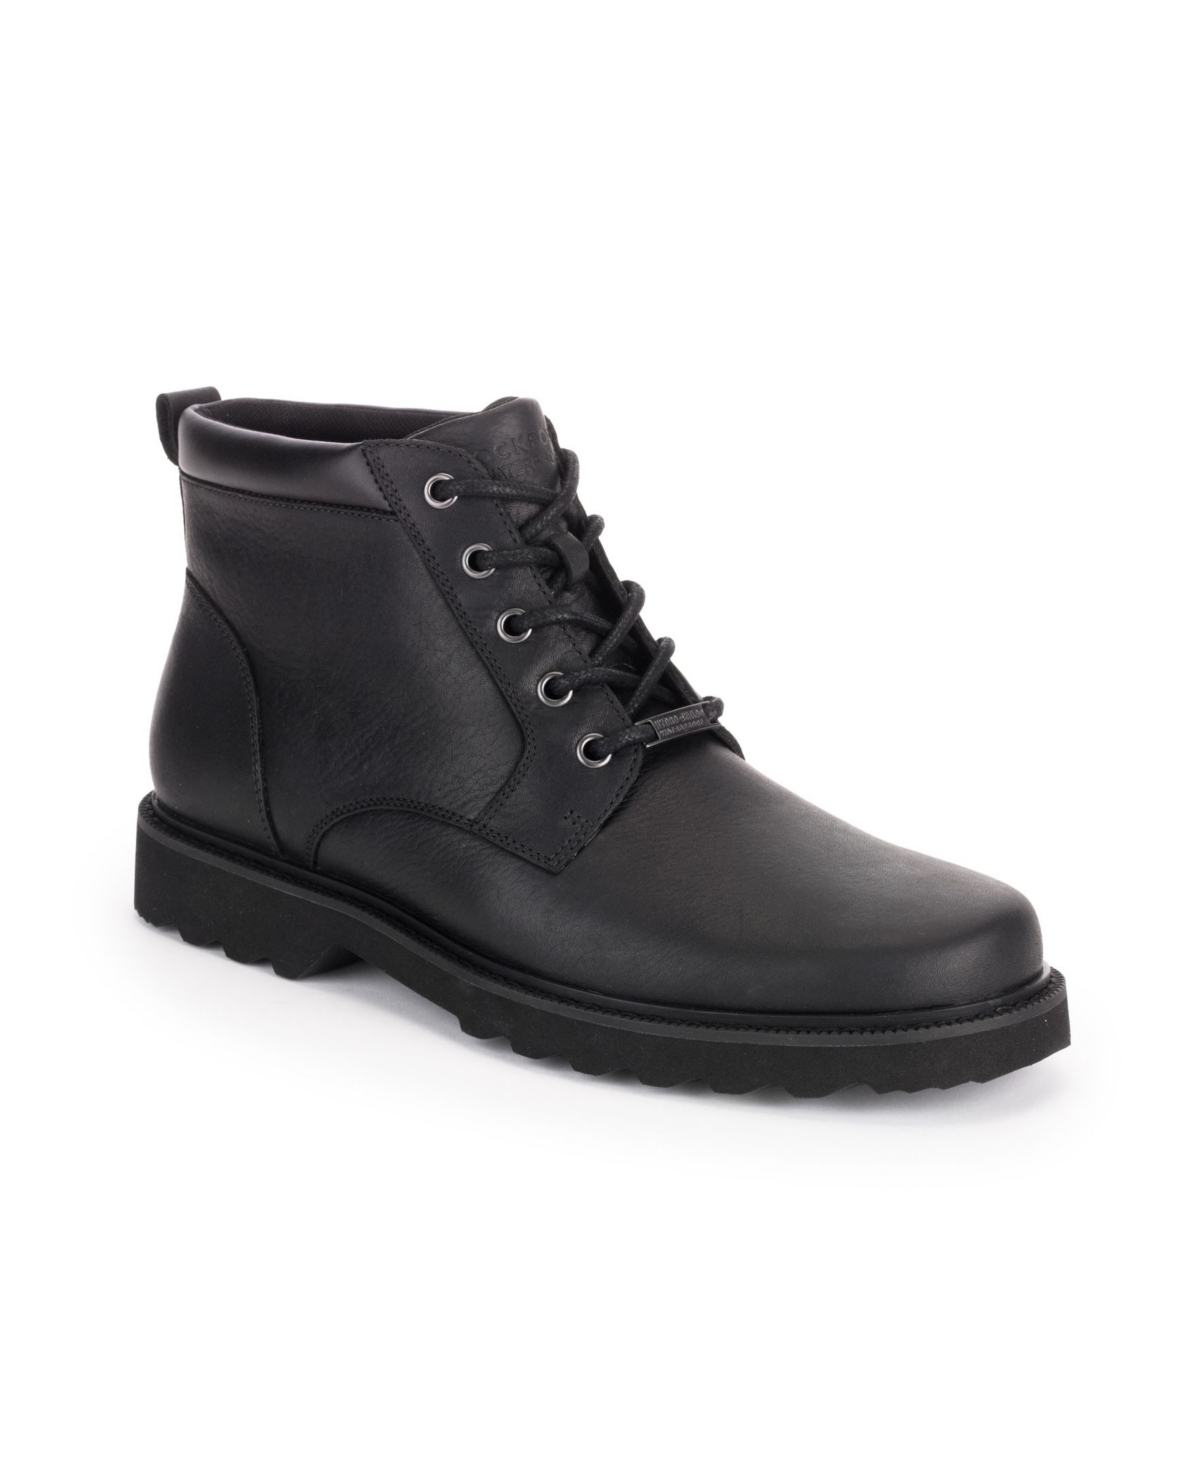 Men's Northfield Plain Toe Boots - Black